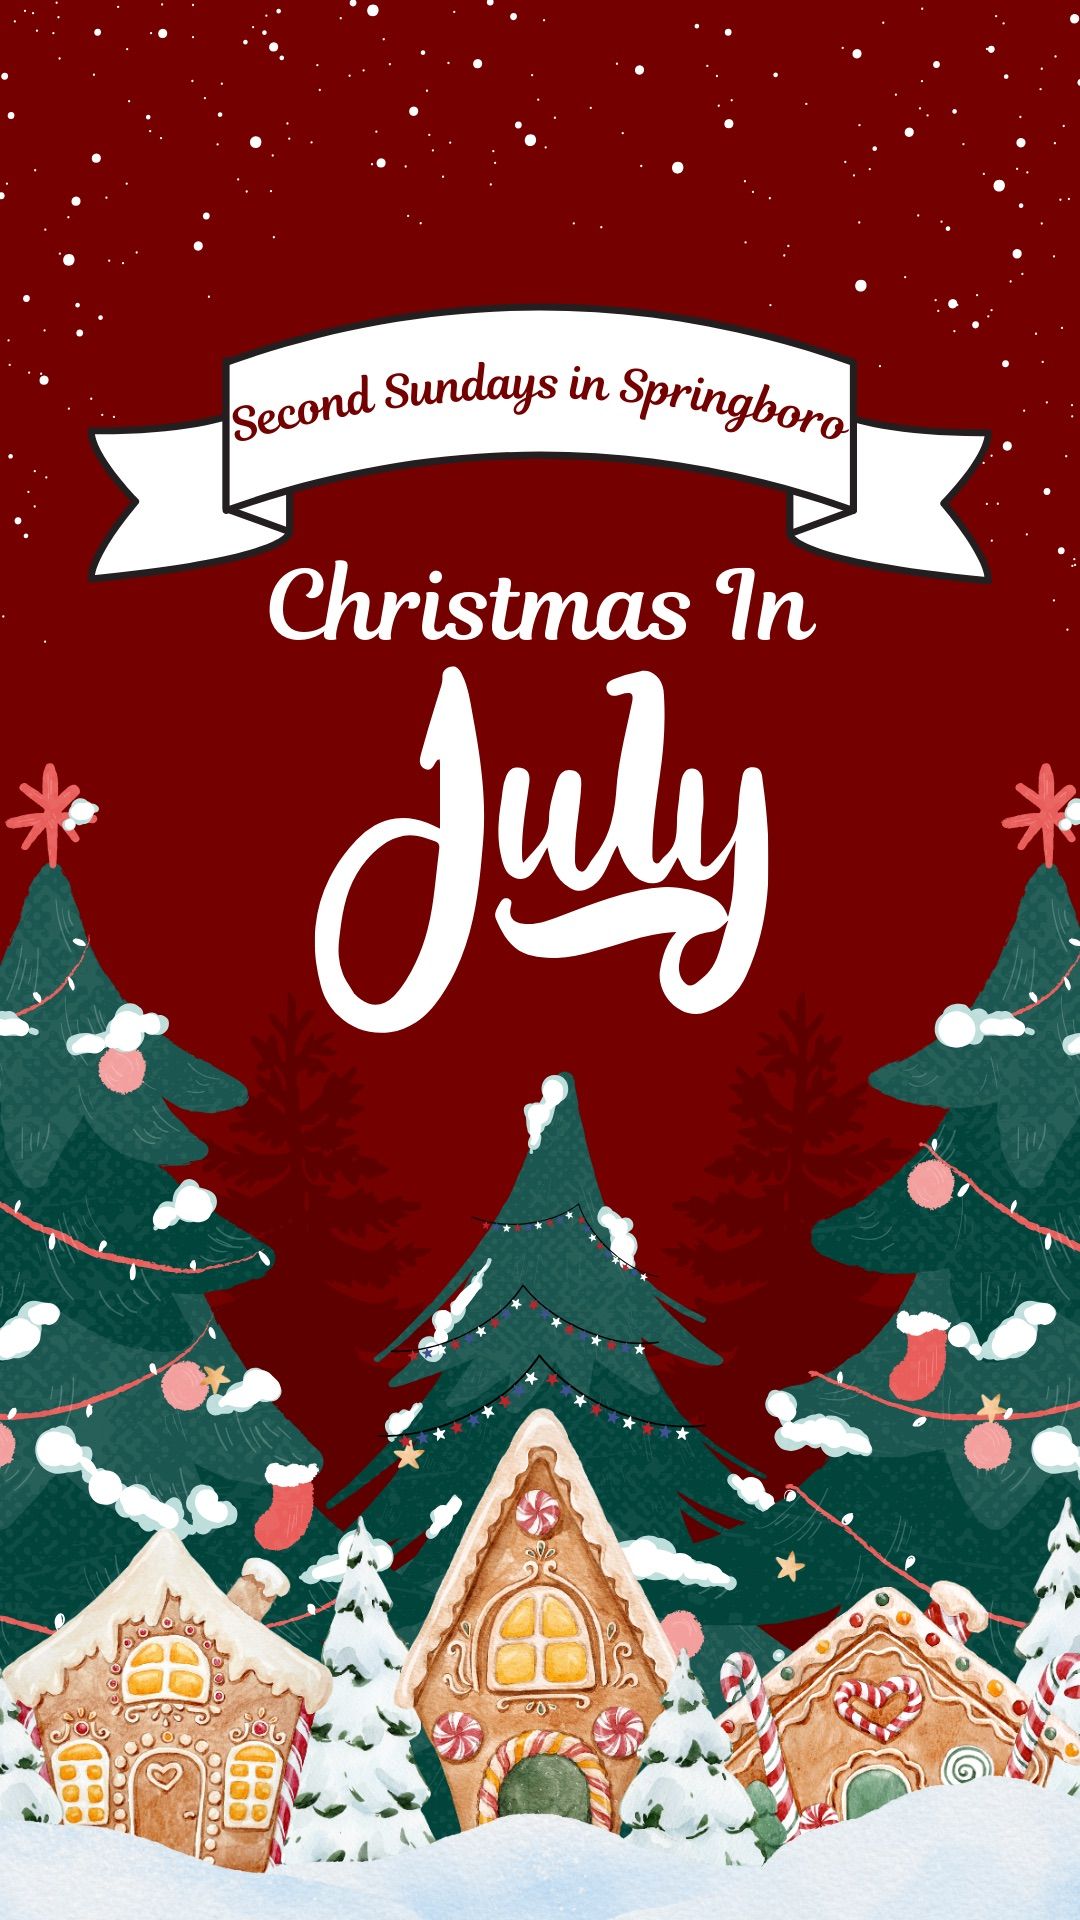 Second Sundays in Springboro - Christmas in July